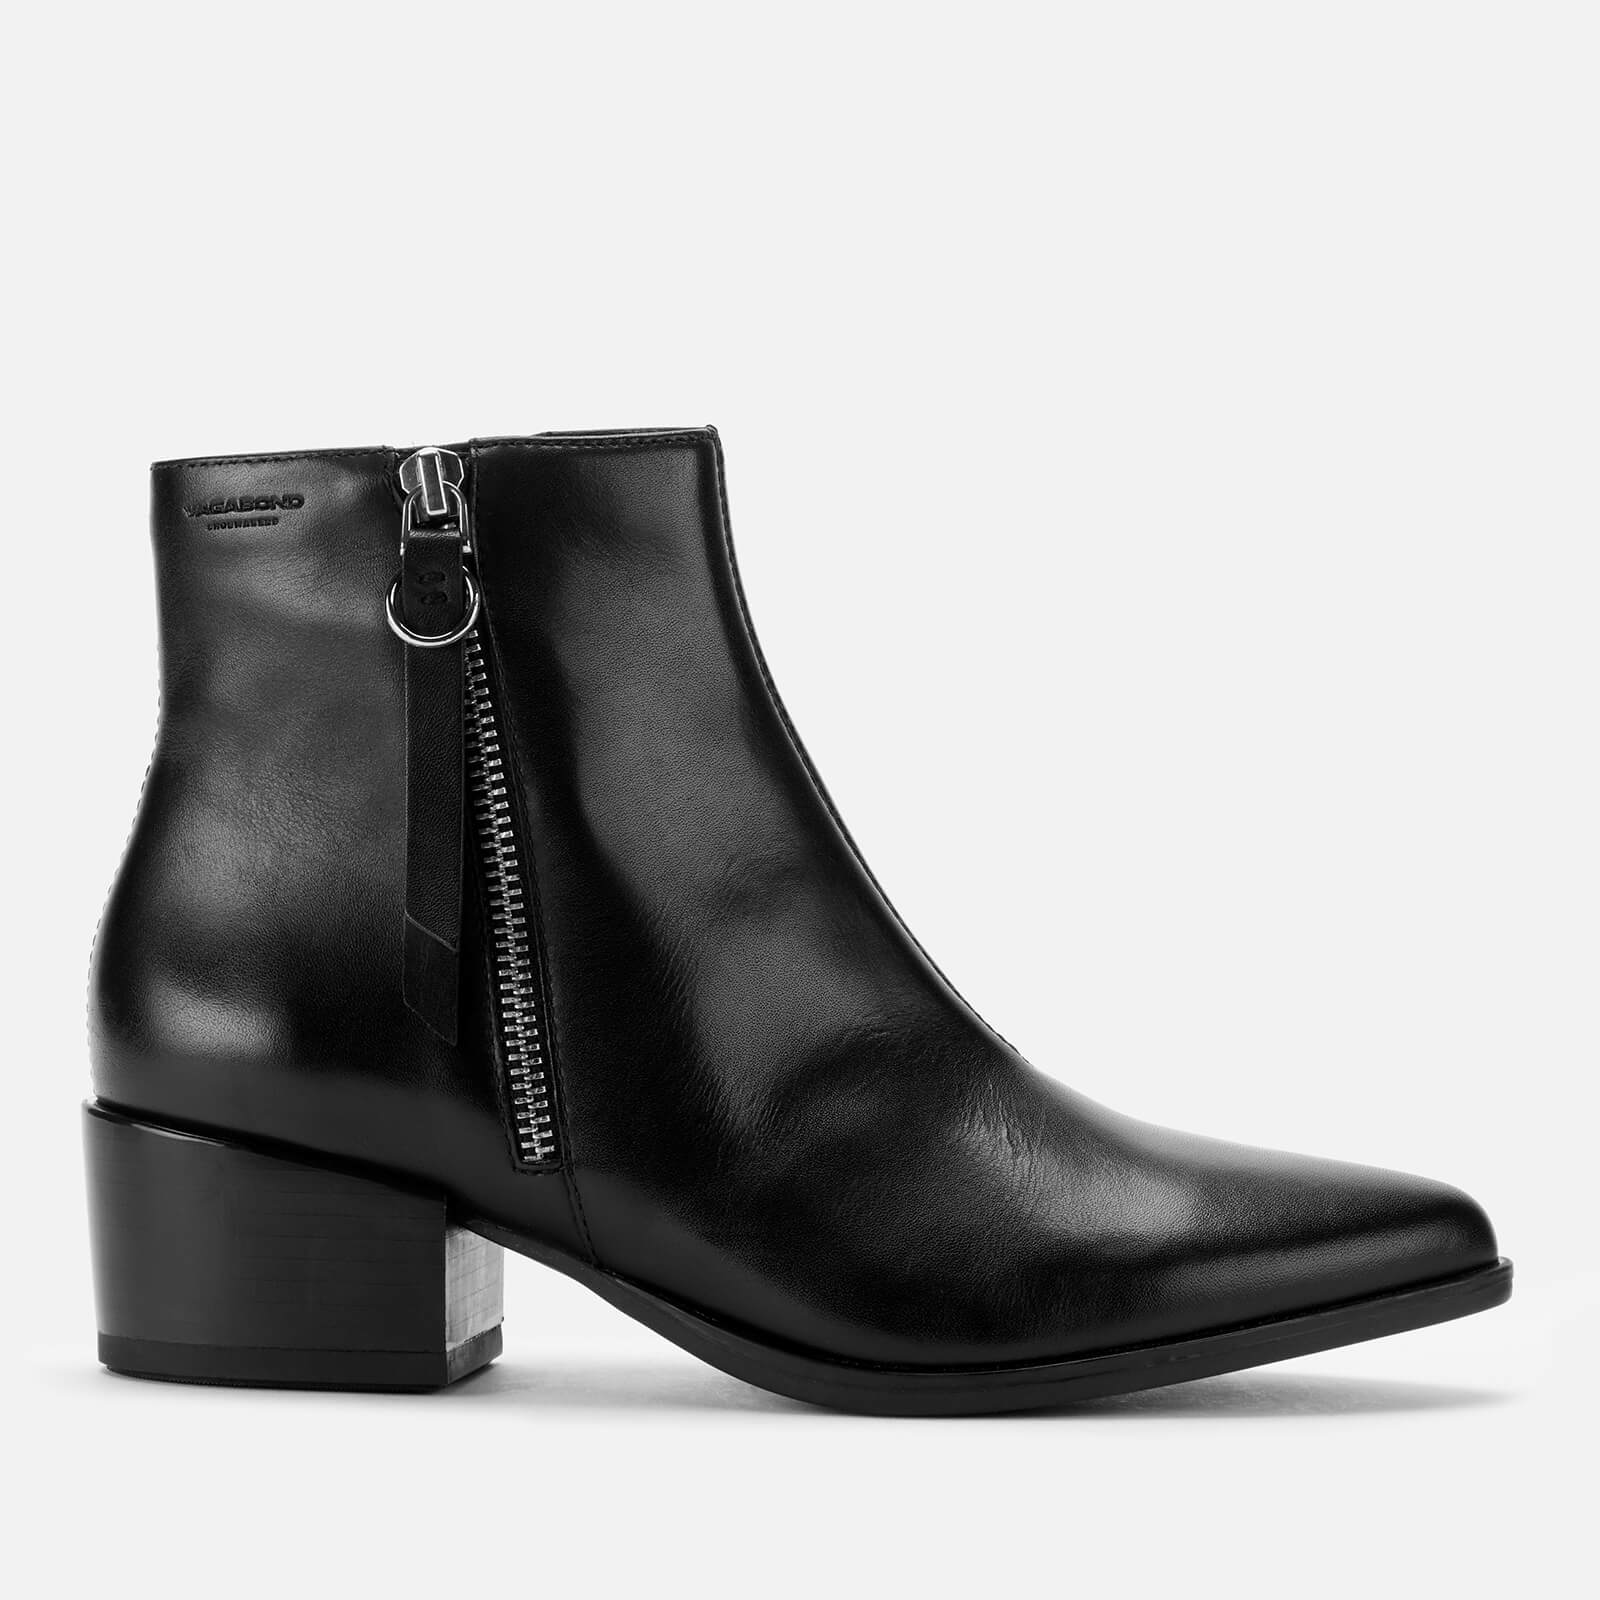 Vagabond Women's Marja Leather Heeled Ankle Boots - Black - UK 7